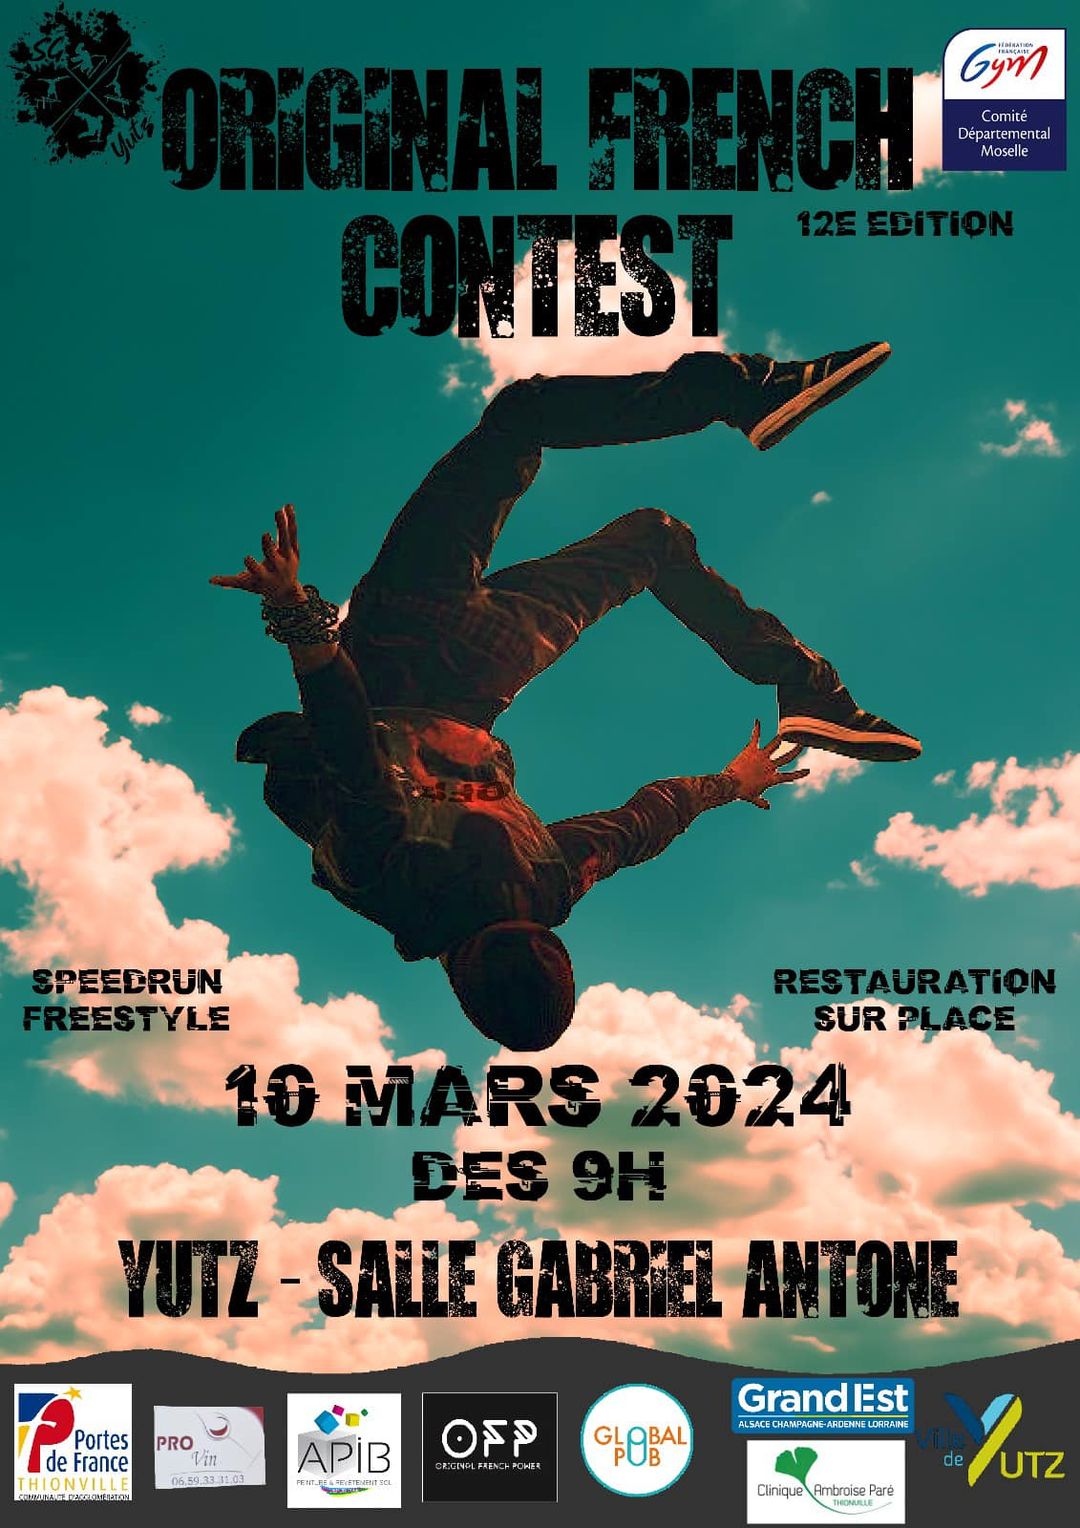 Société de Gymnastique de Yutz : Original French Contest